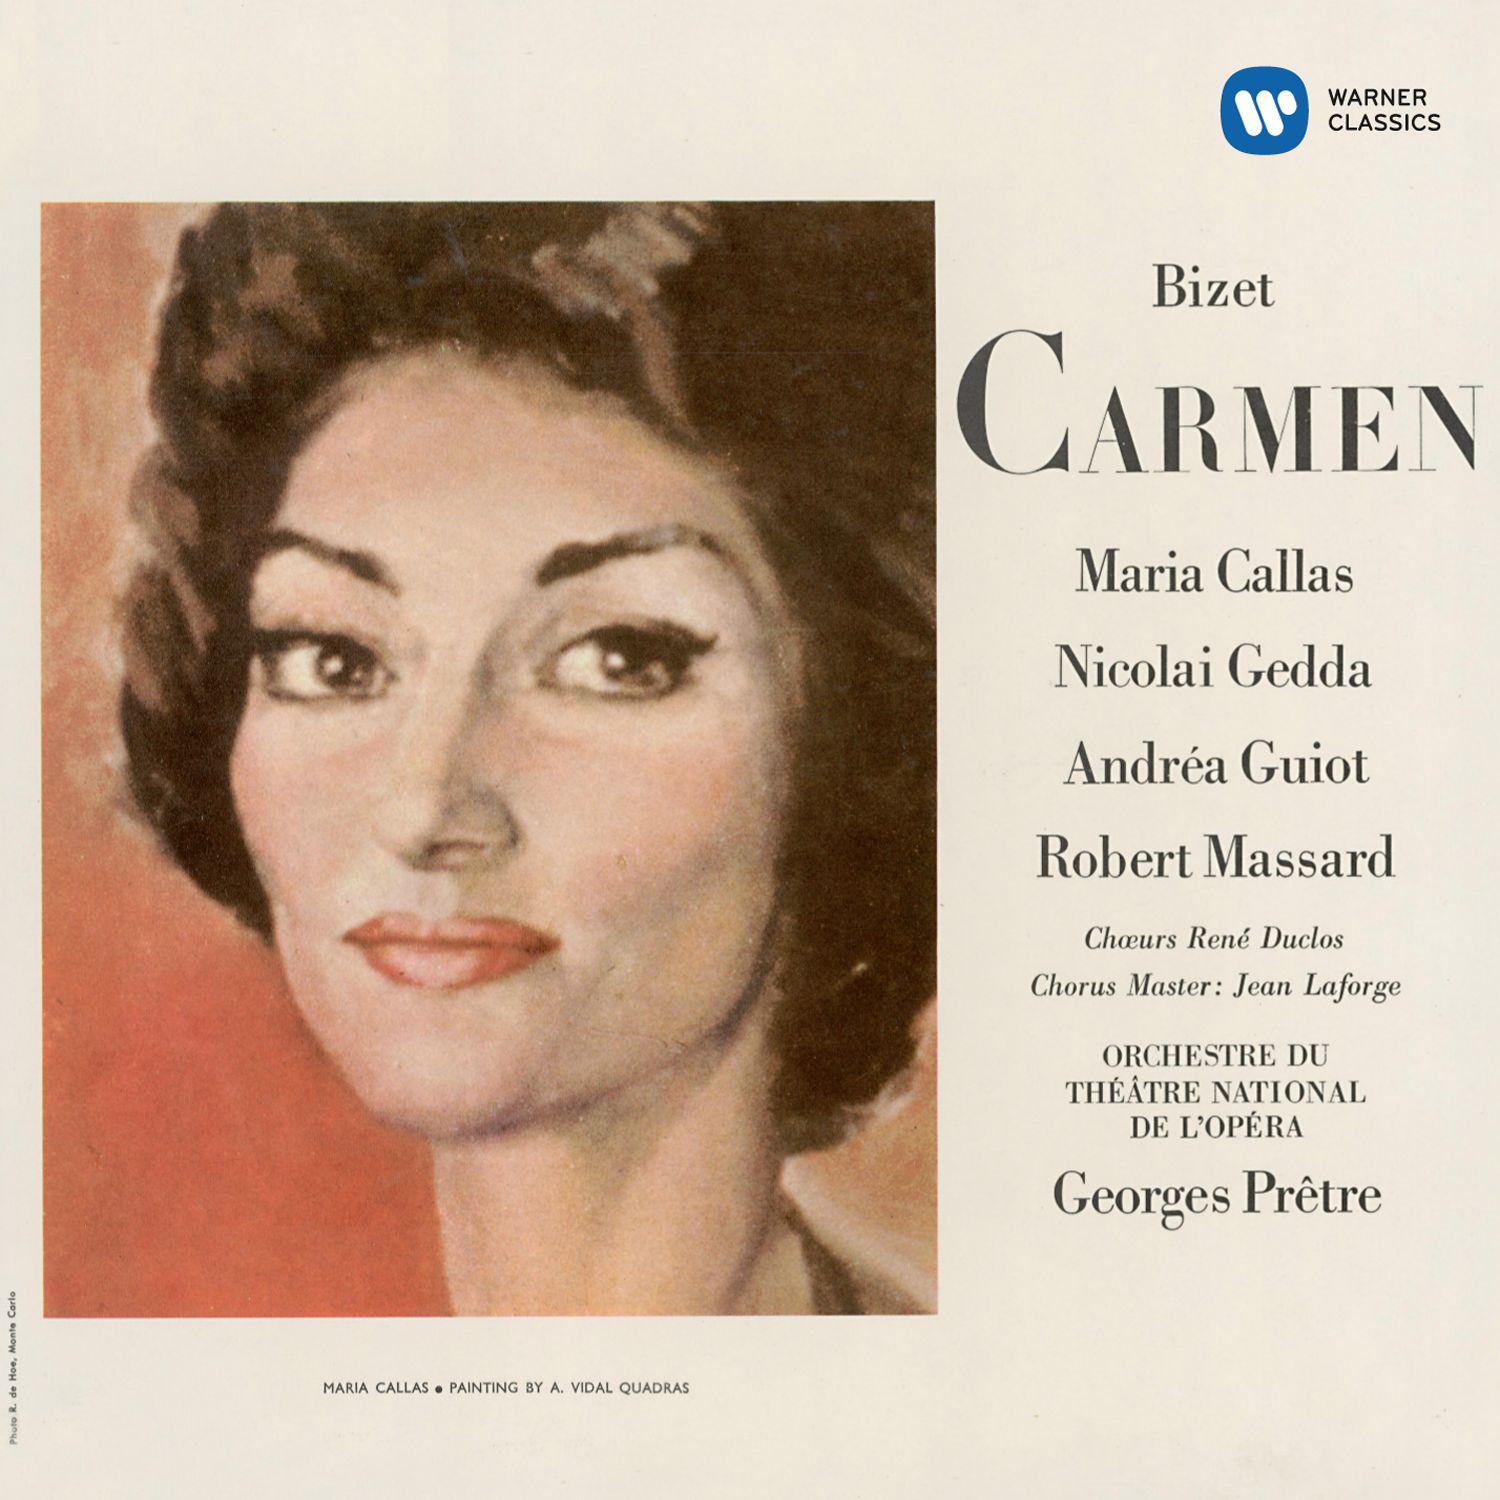 Bizet: Carmen (1964 - Prêtre) - Callas Remastered